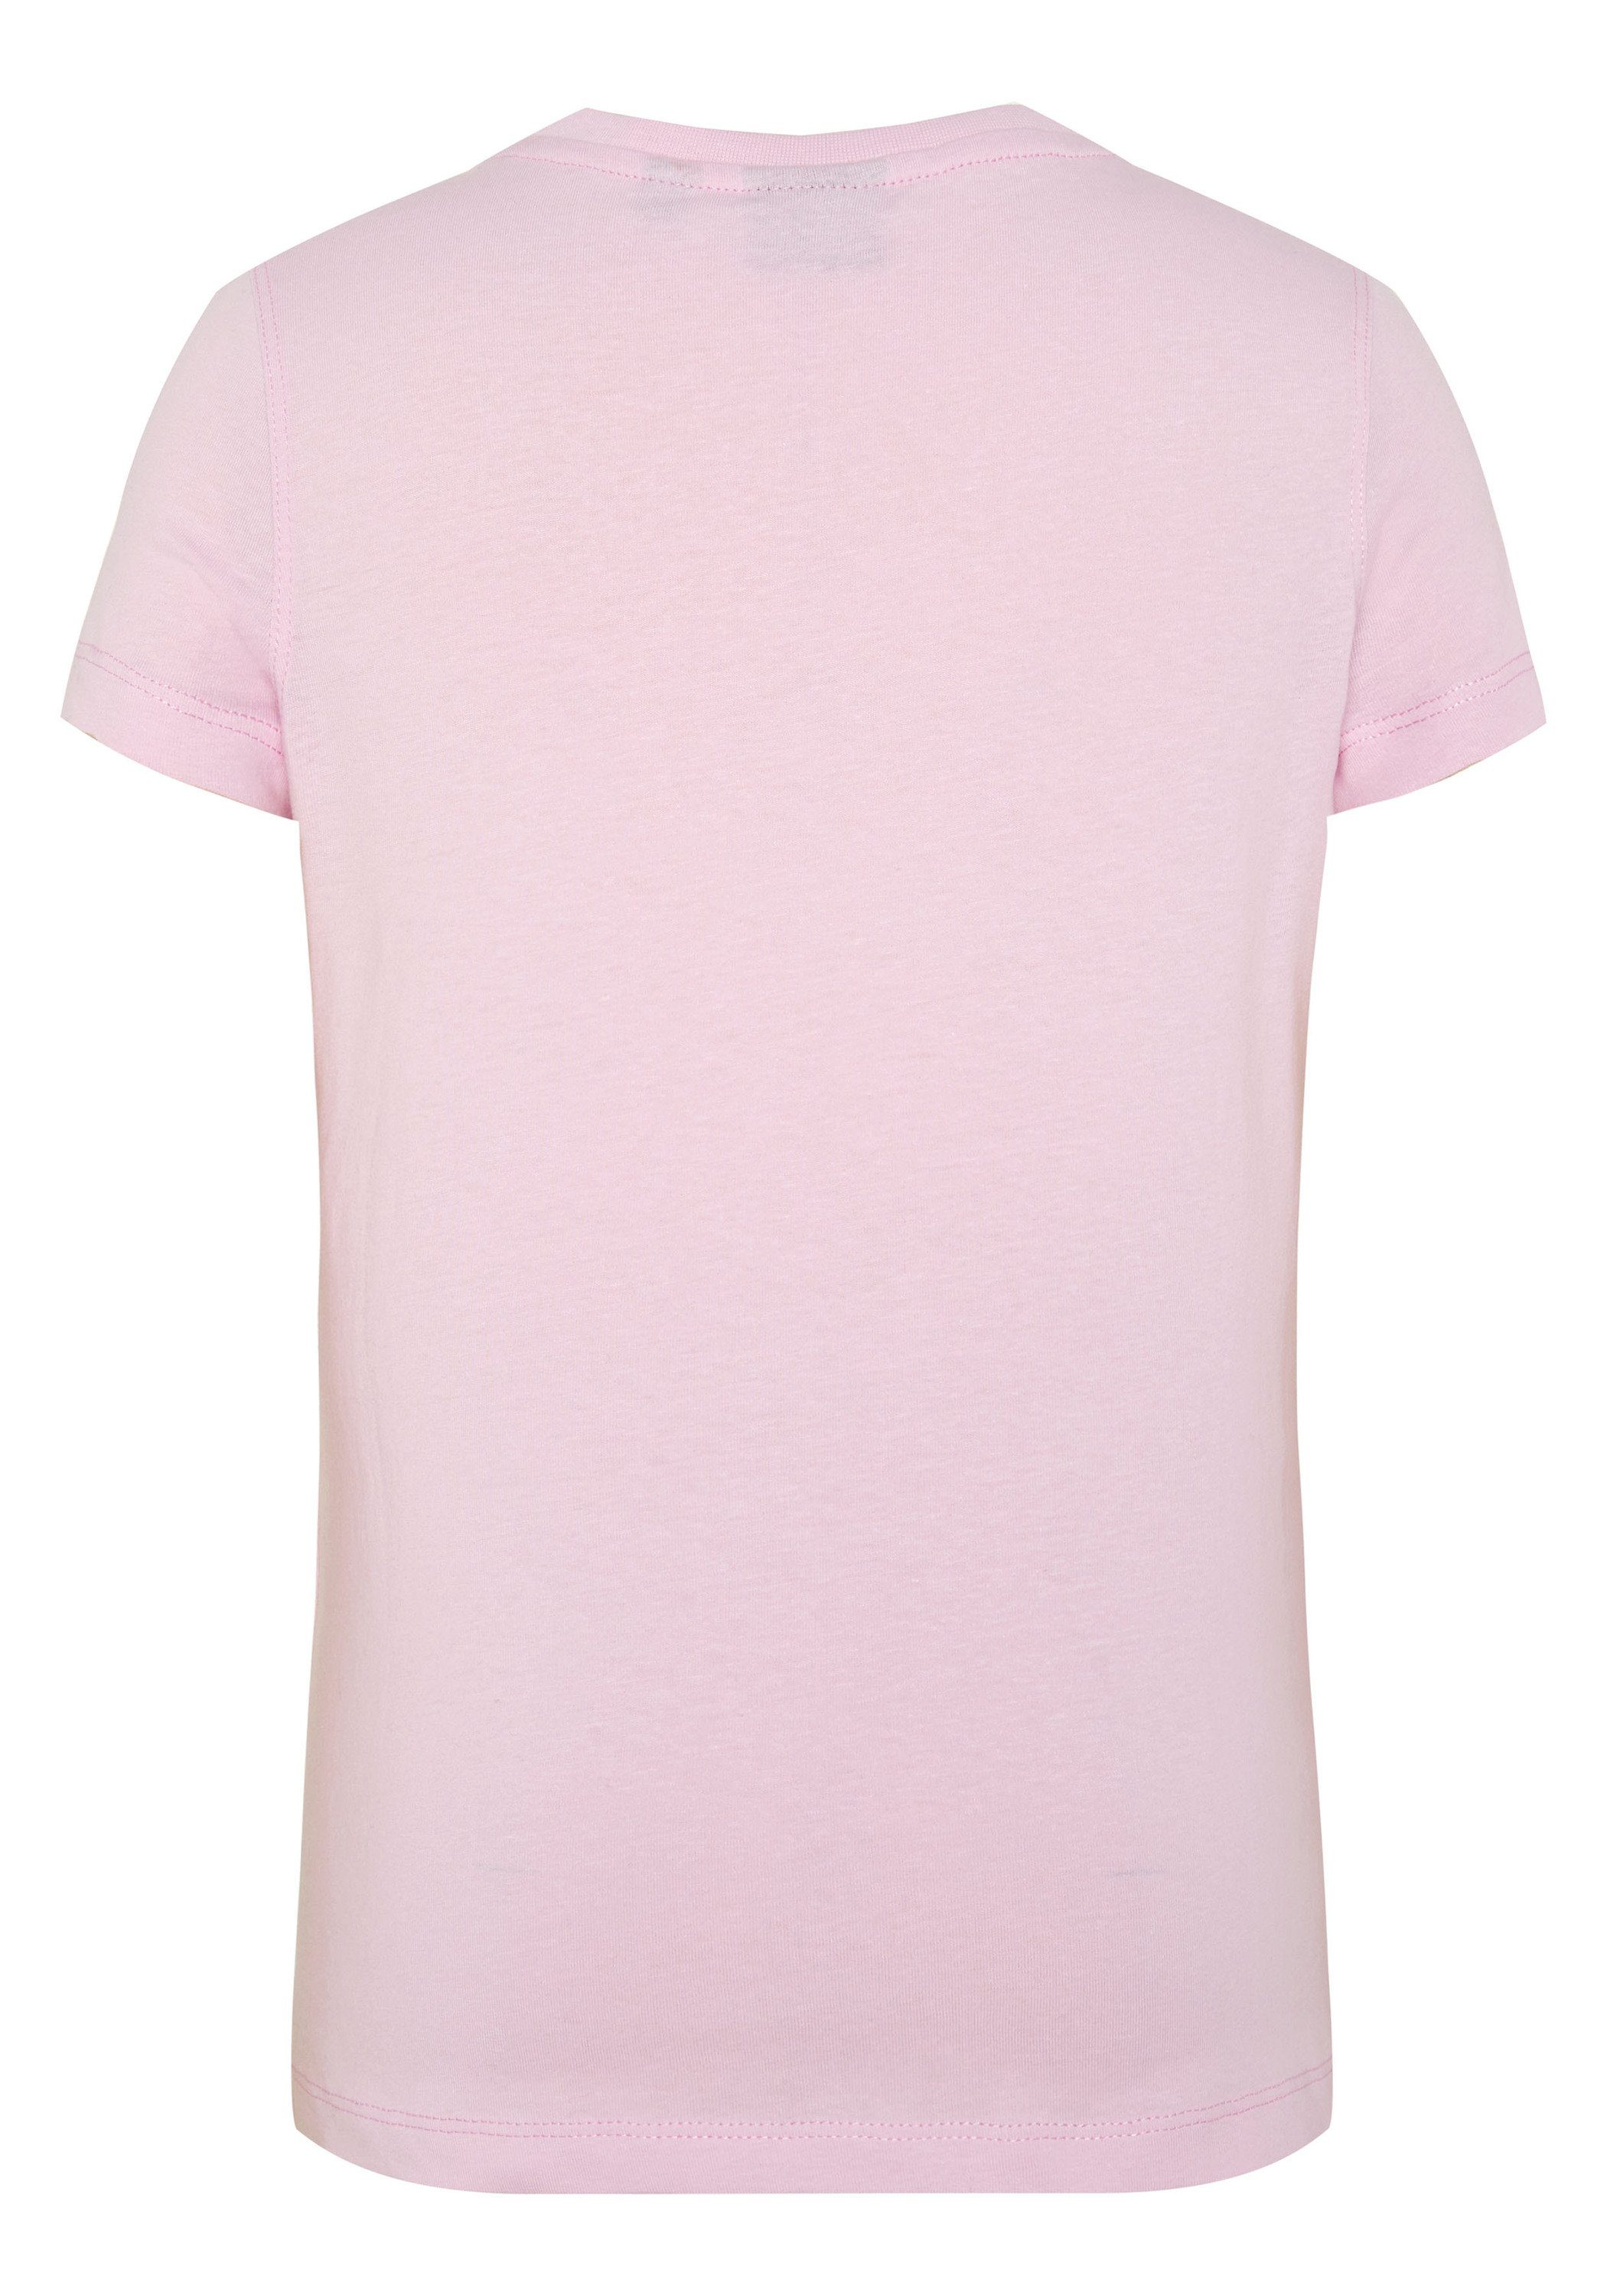 Polo 13-2806 weichem Print-Shirt Jersey Pink Lady aus Sylt